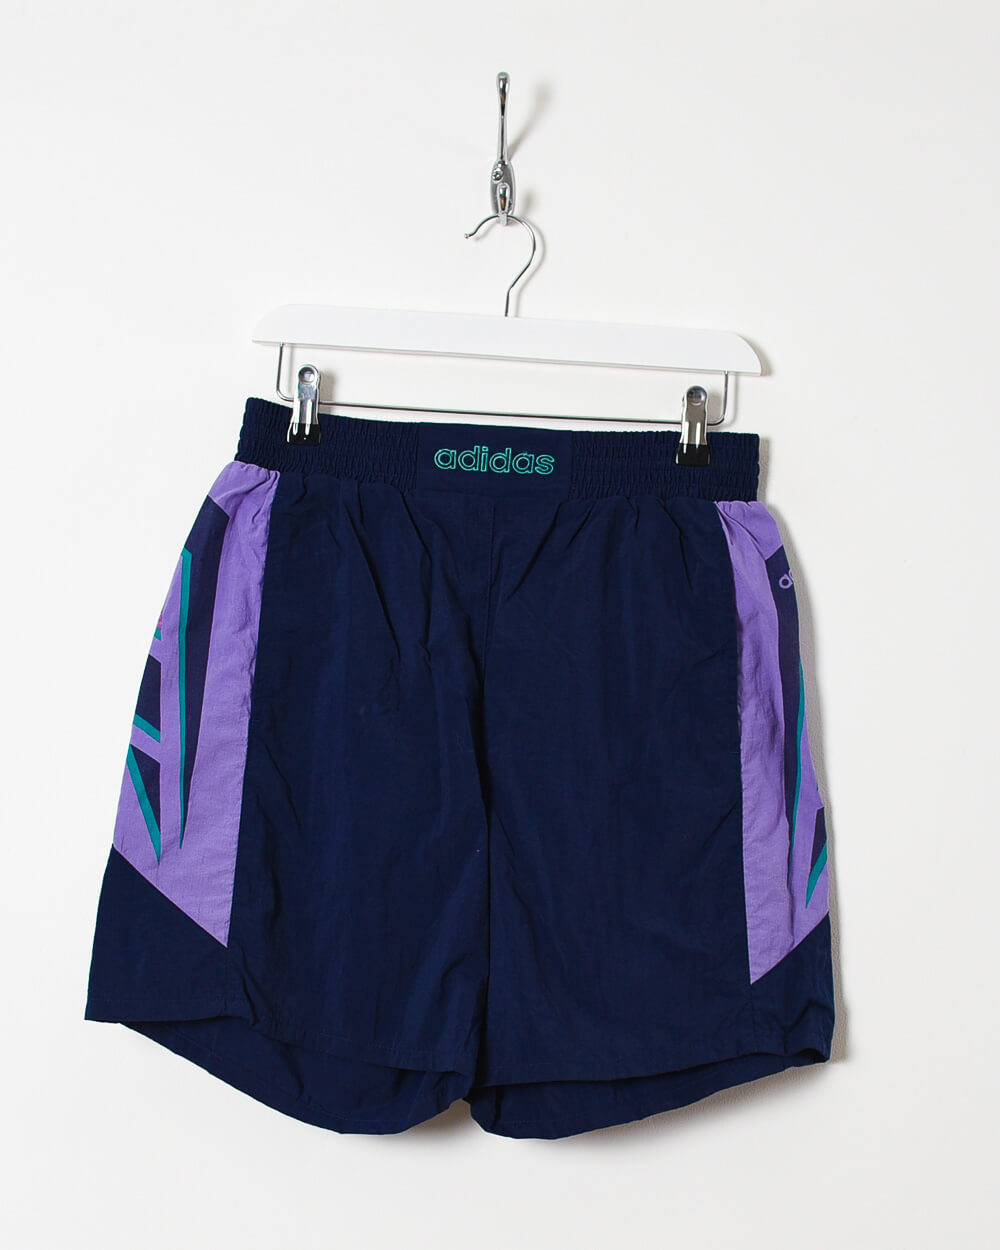 Navy Adidas Shorts - W28